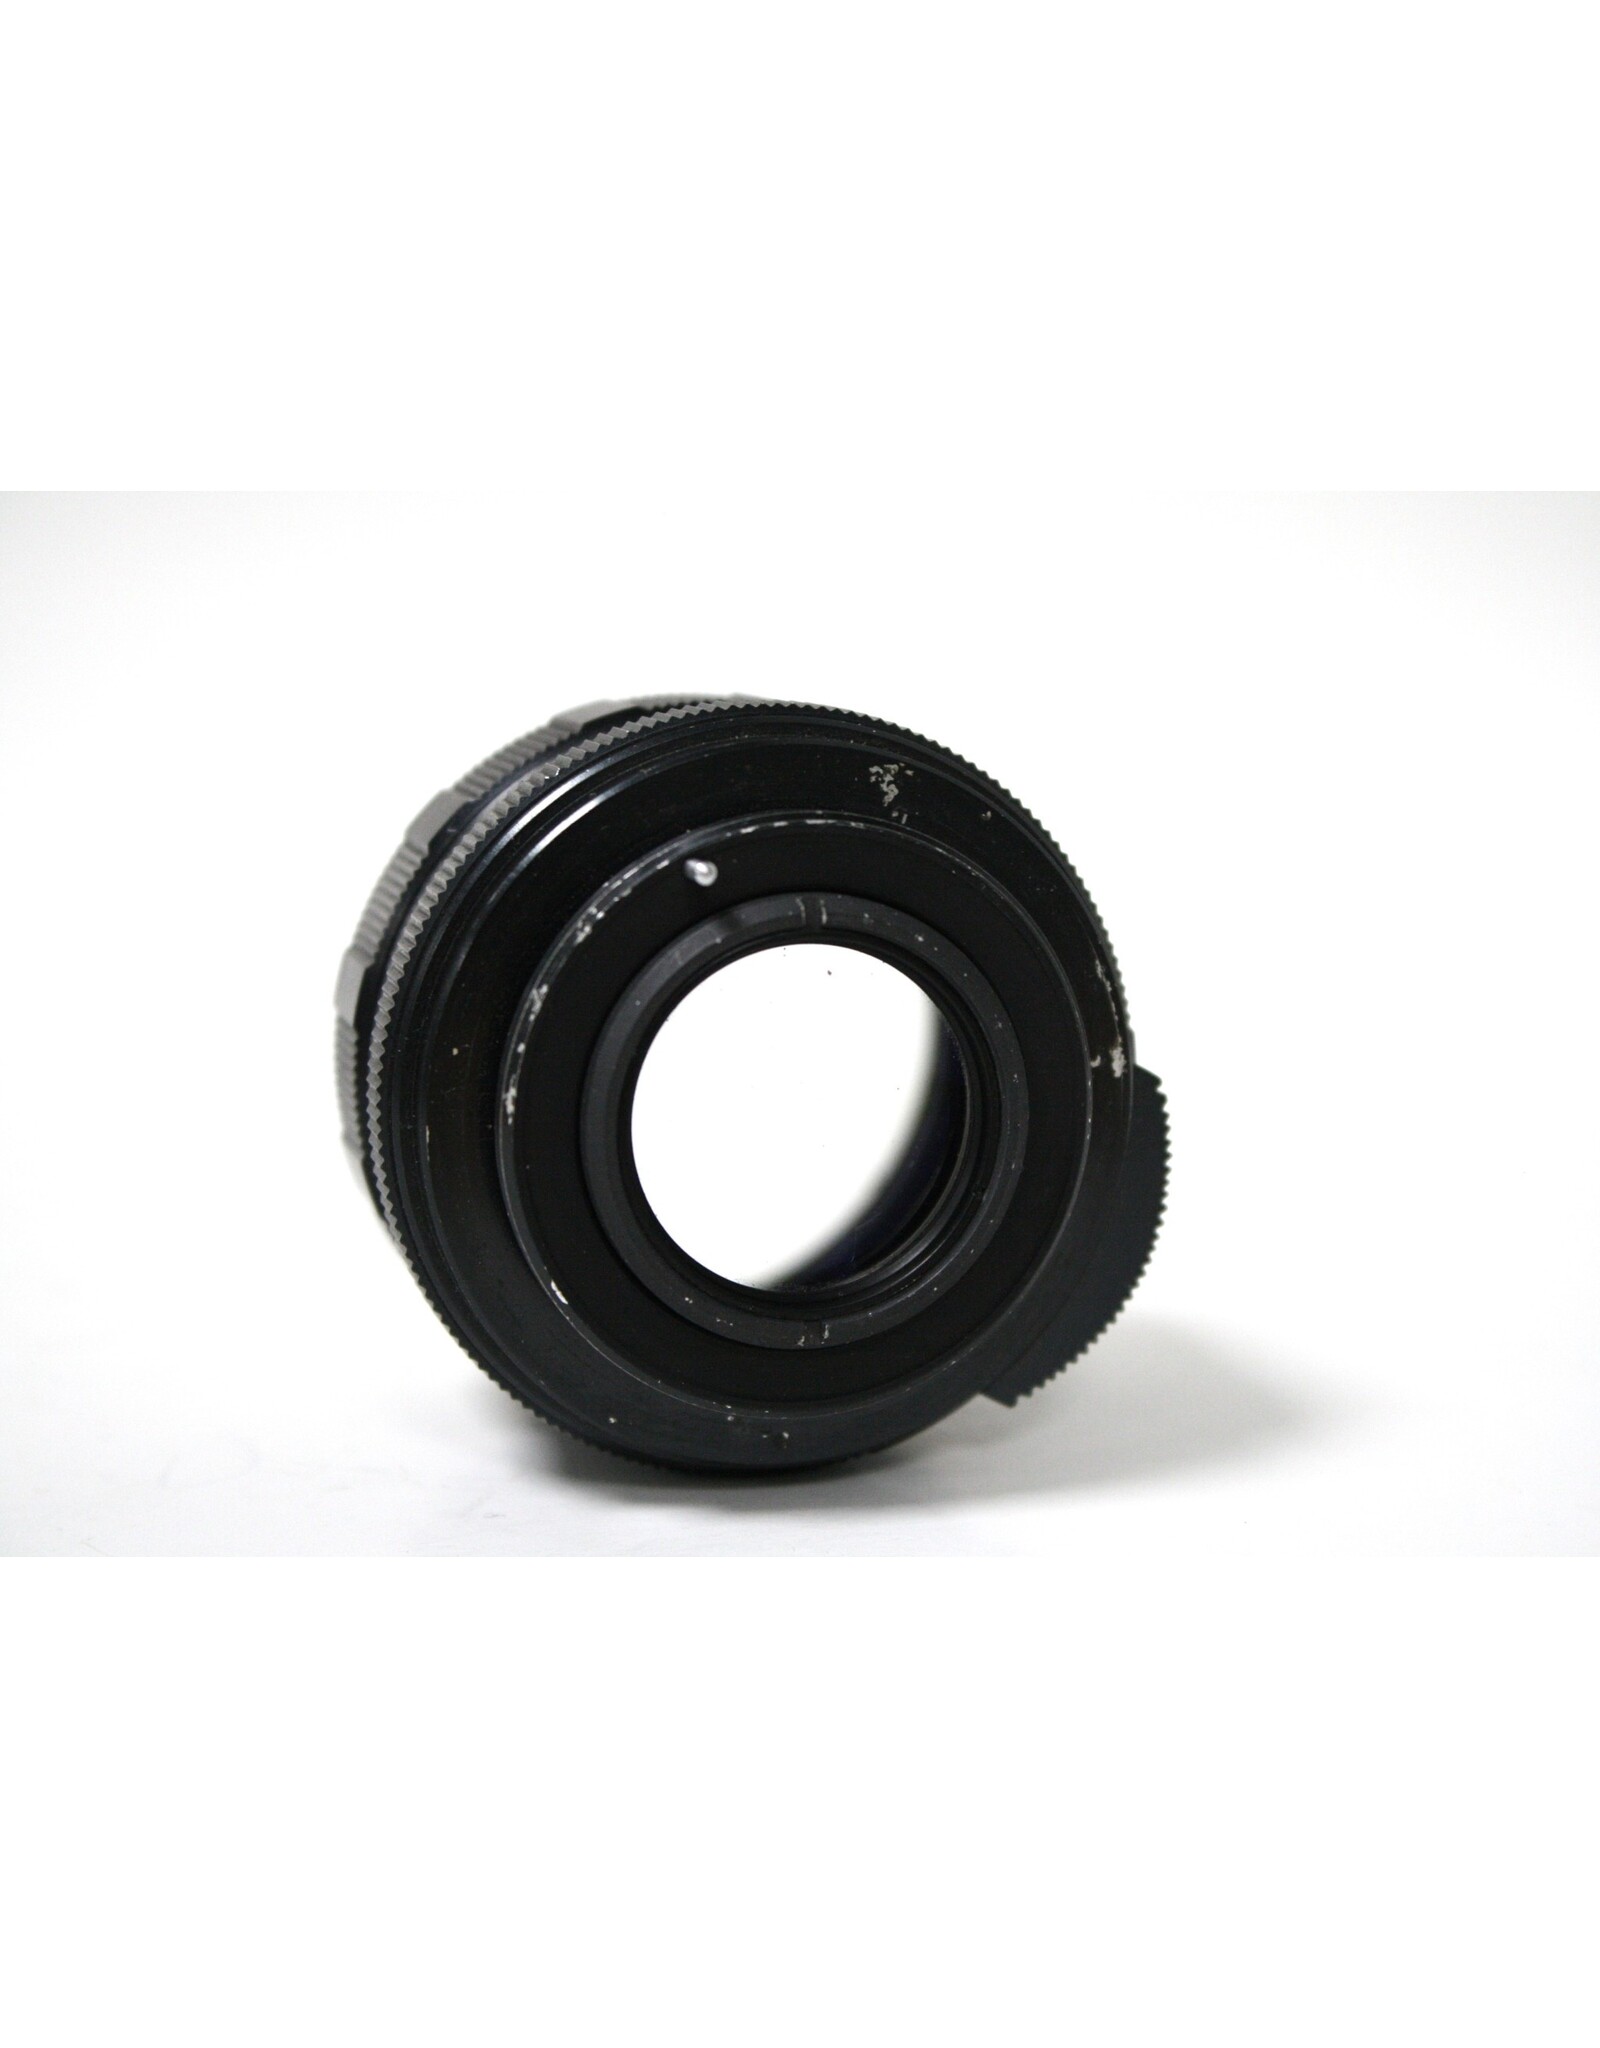 Pentax Asahi Auto-Takumar f/1.8 55mm Lens for Pentax Screw Mount (Pre-Owned)